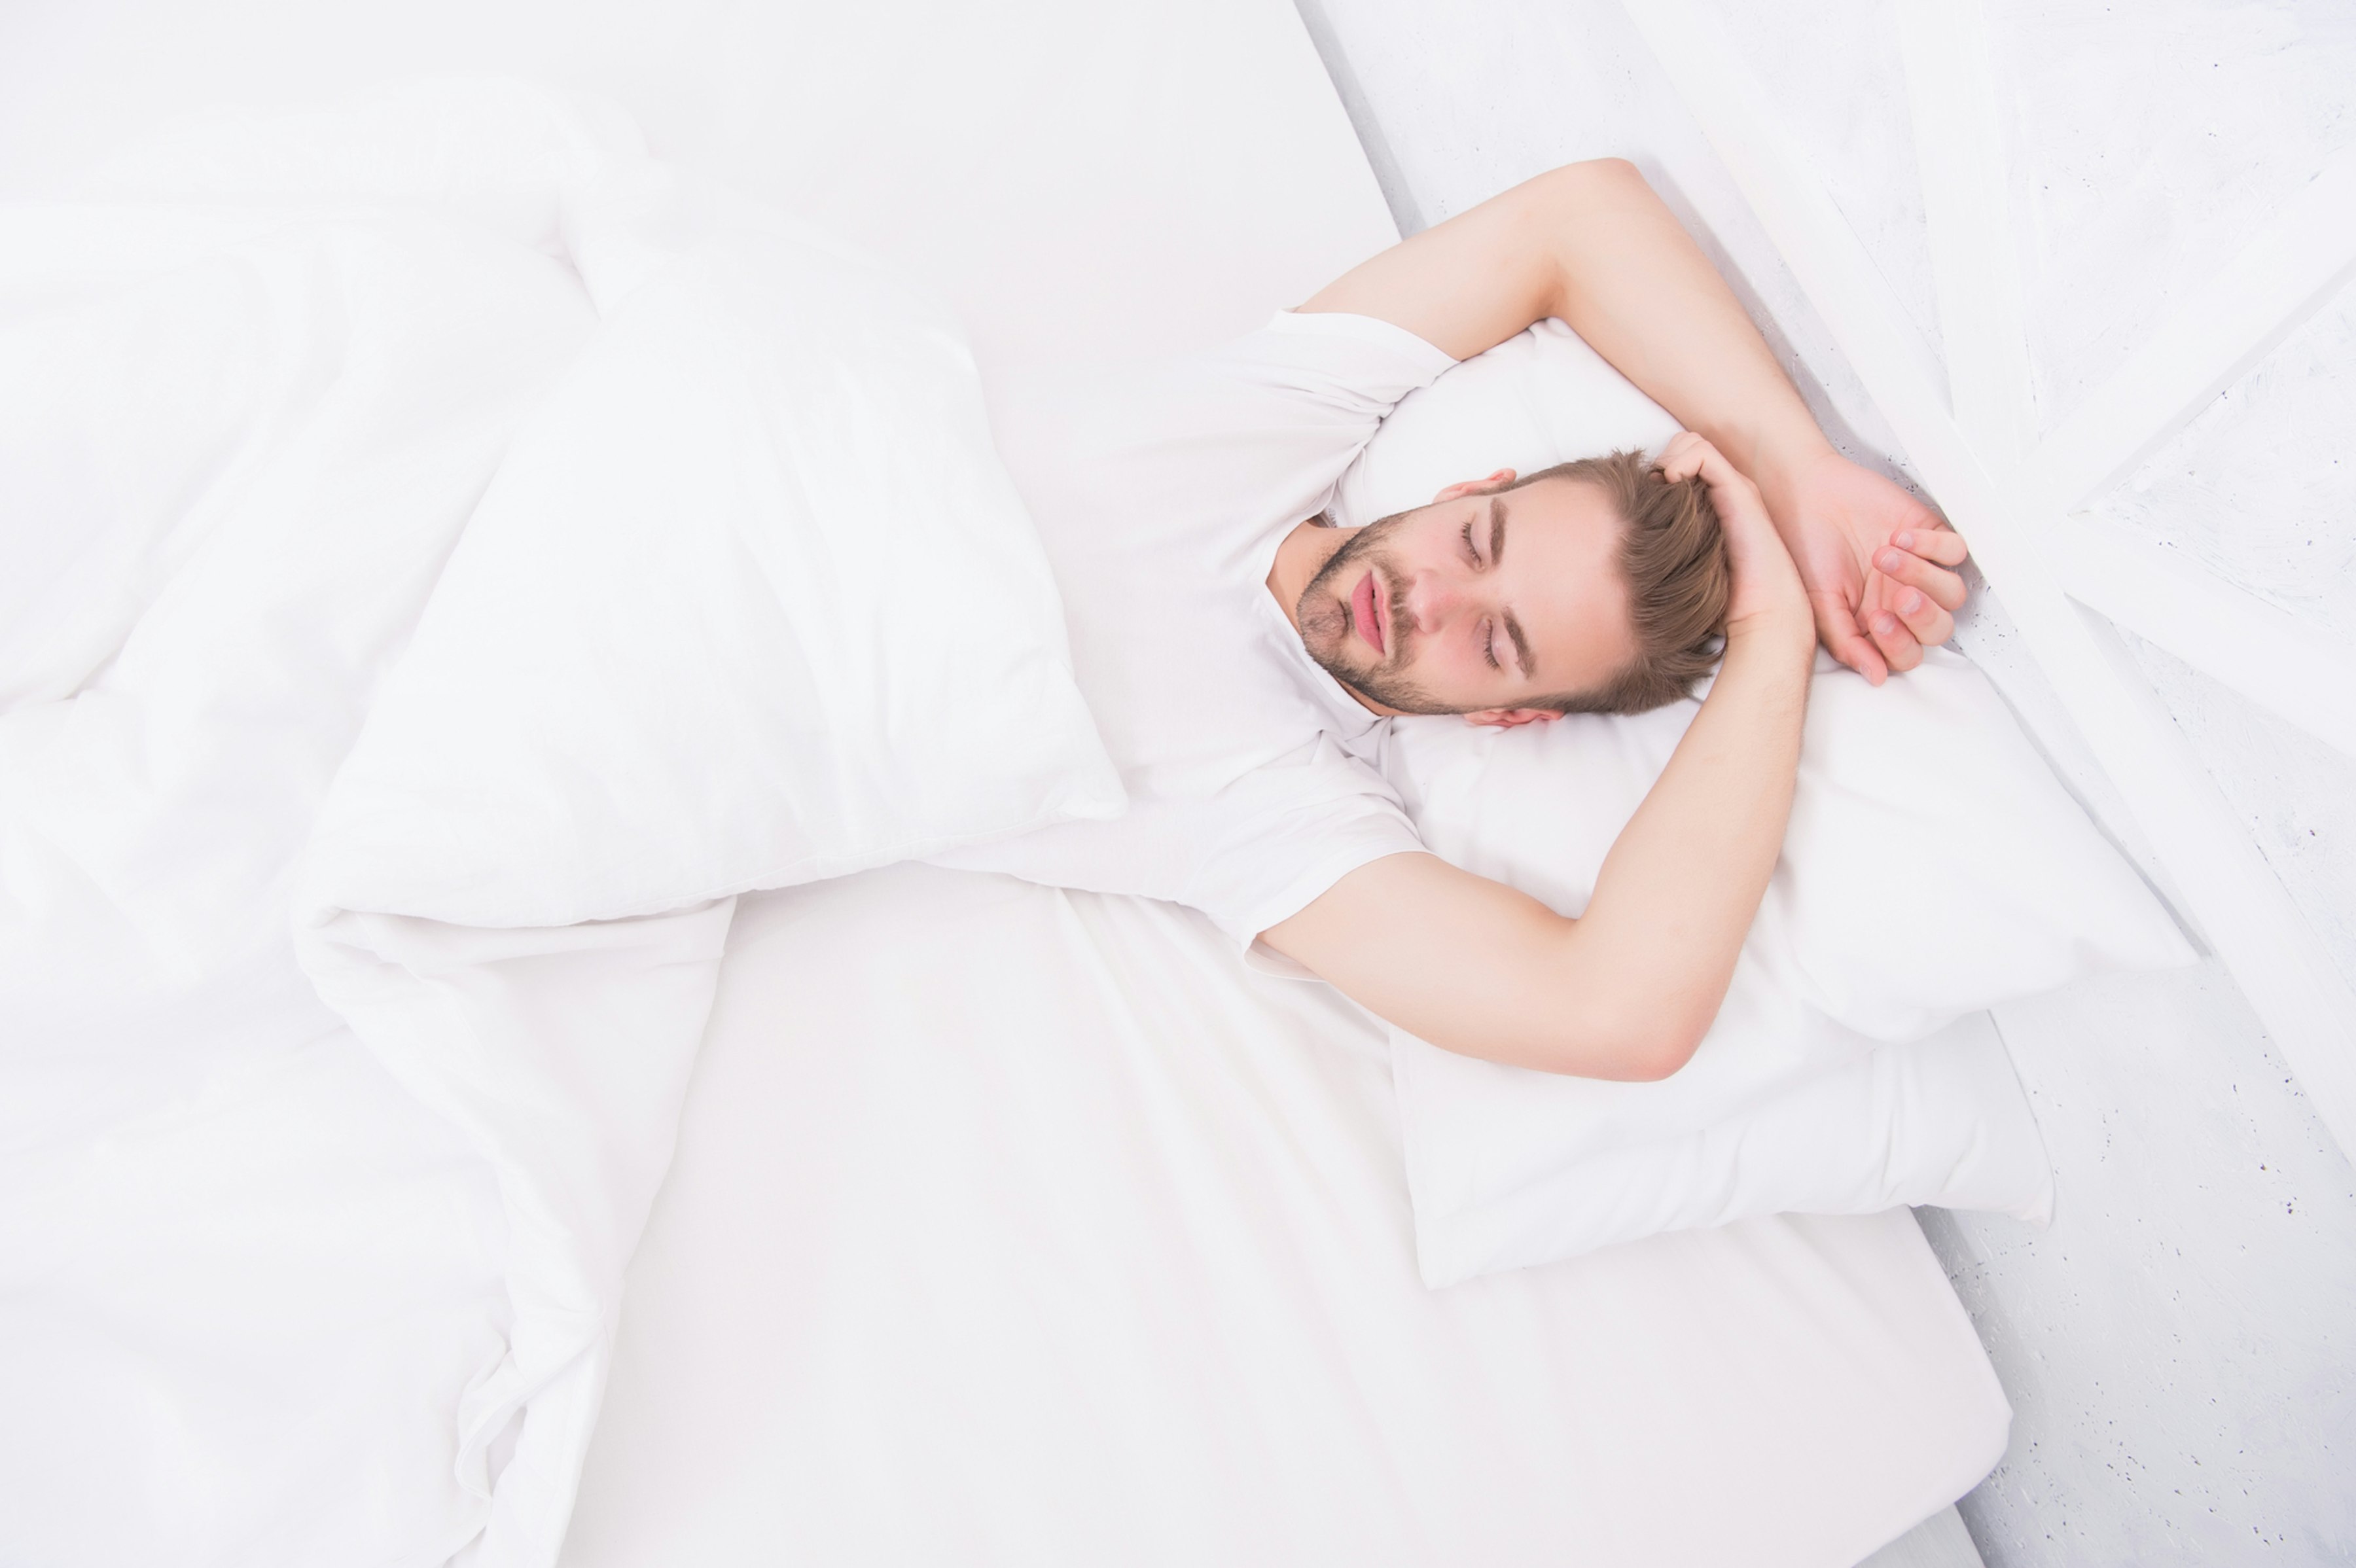 Improve sleep quality after alcohol